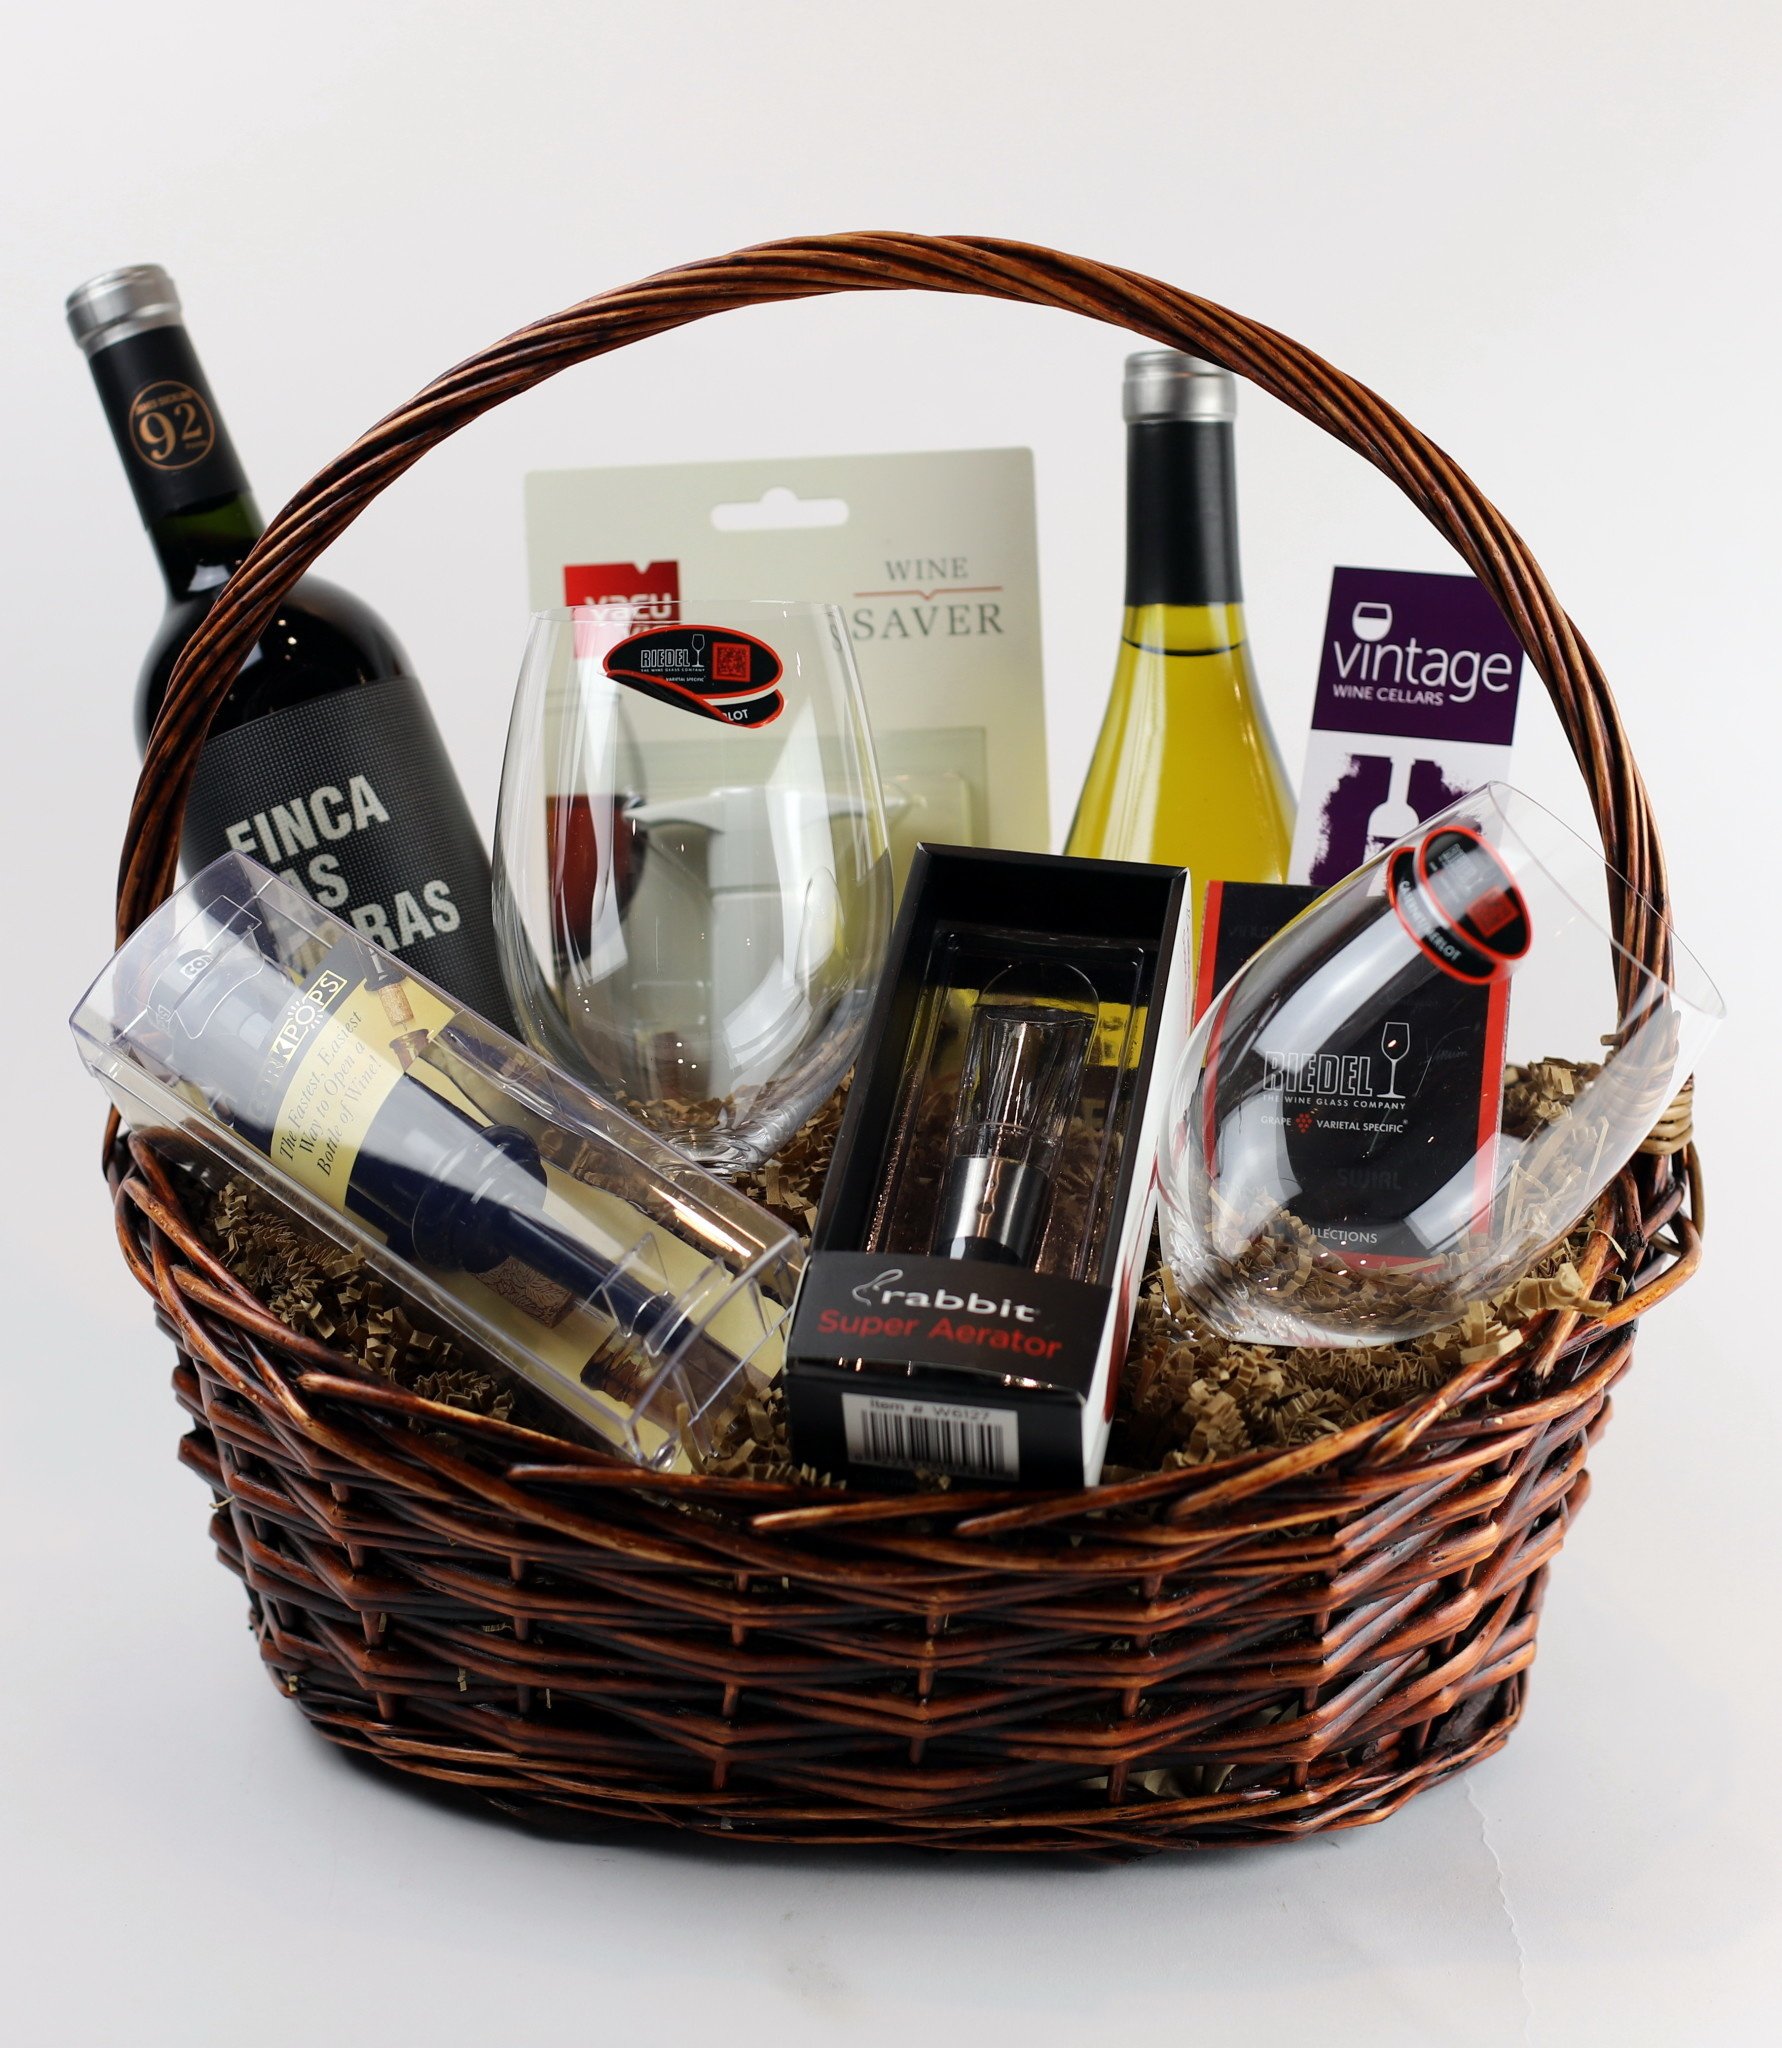 https://cdn.shoplightspeed.com/shops/626811/files/20814756/vintage-wine-cellars-wine-essentials-gift-basket.jpg